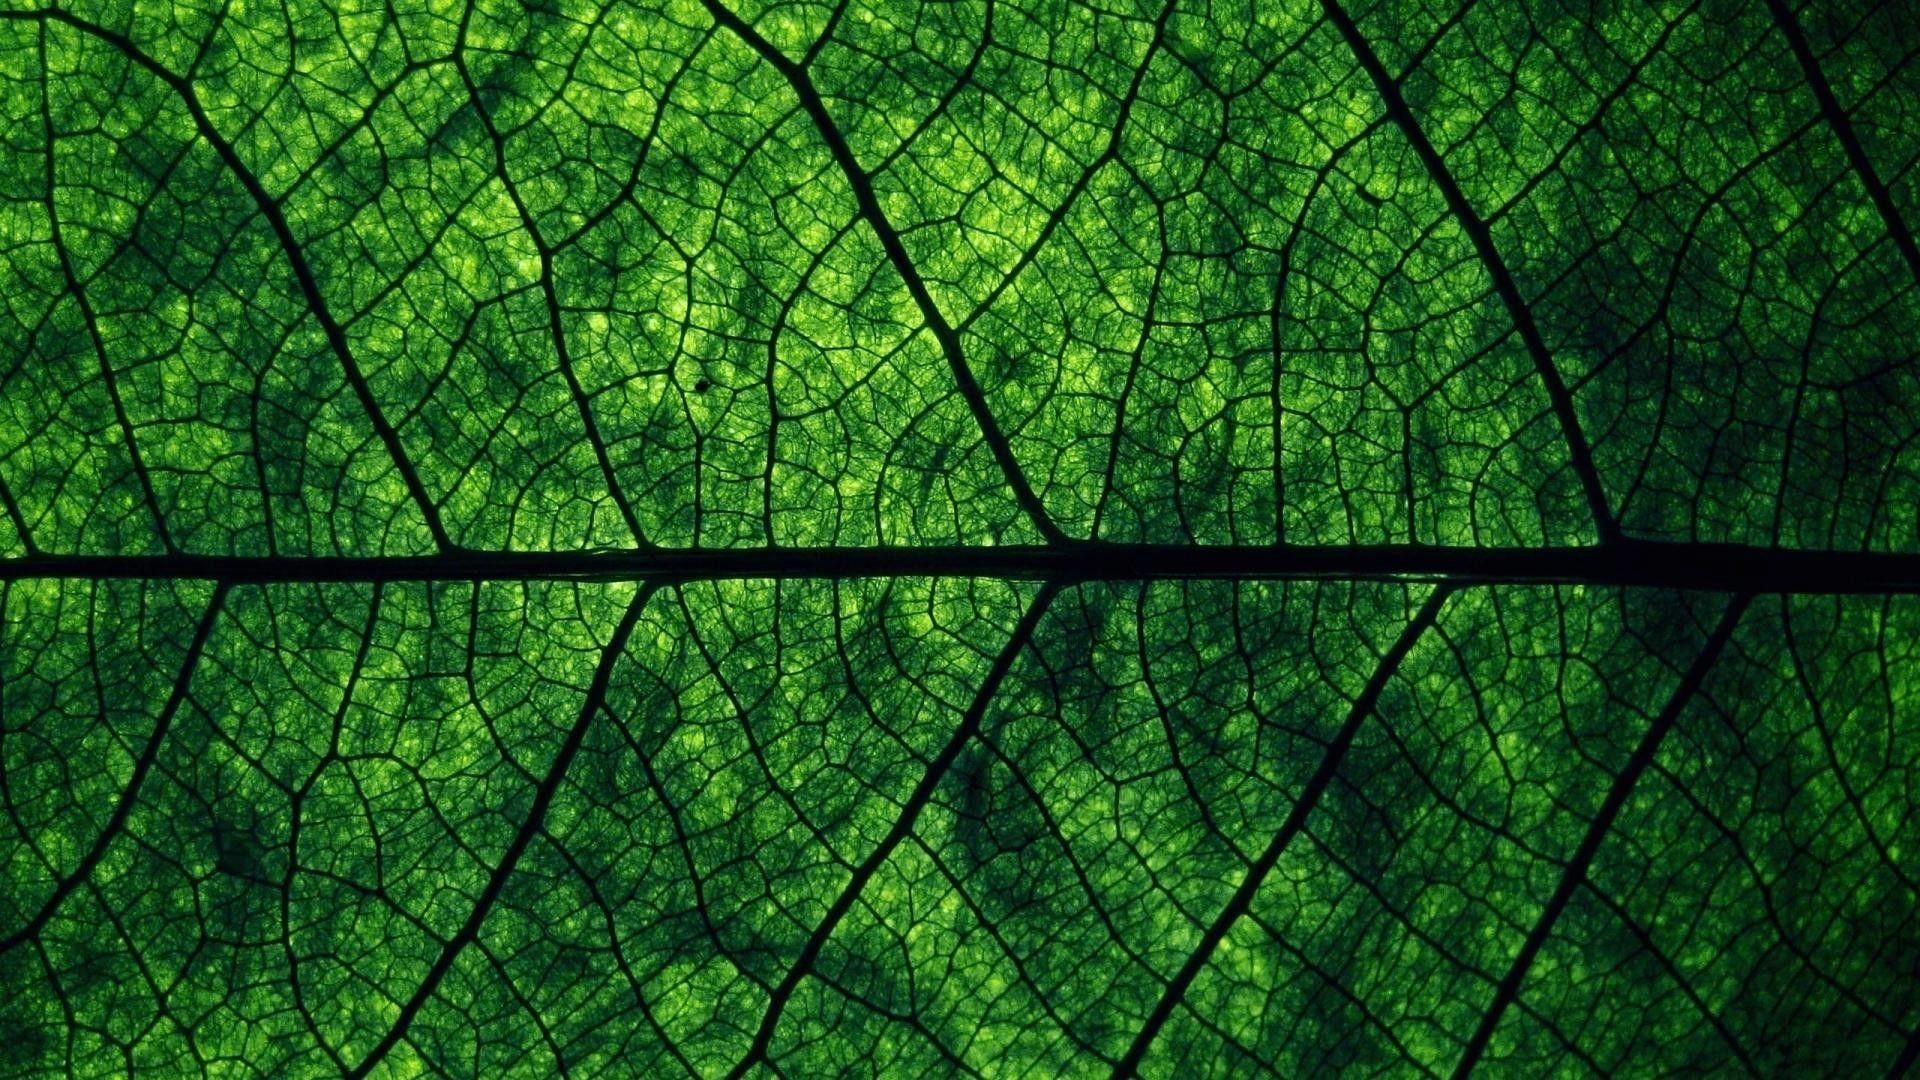 A close up of the leaf - Dark green